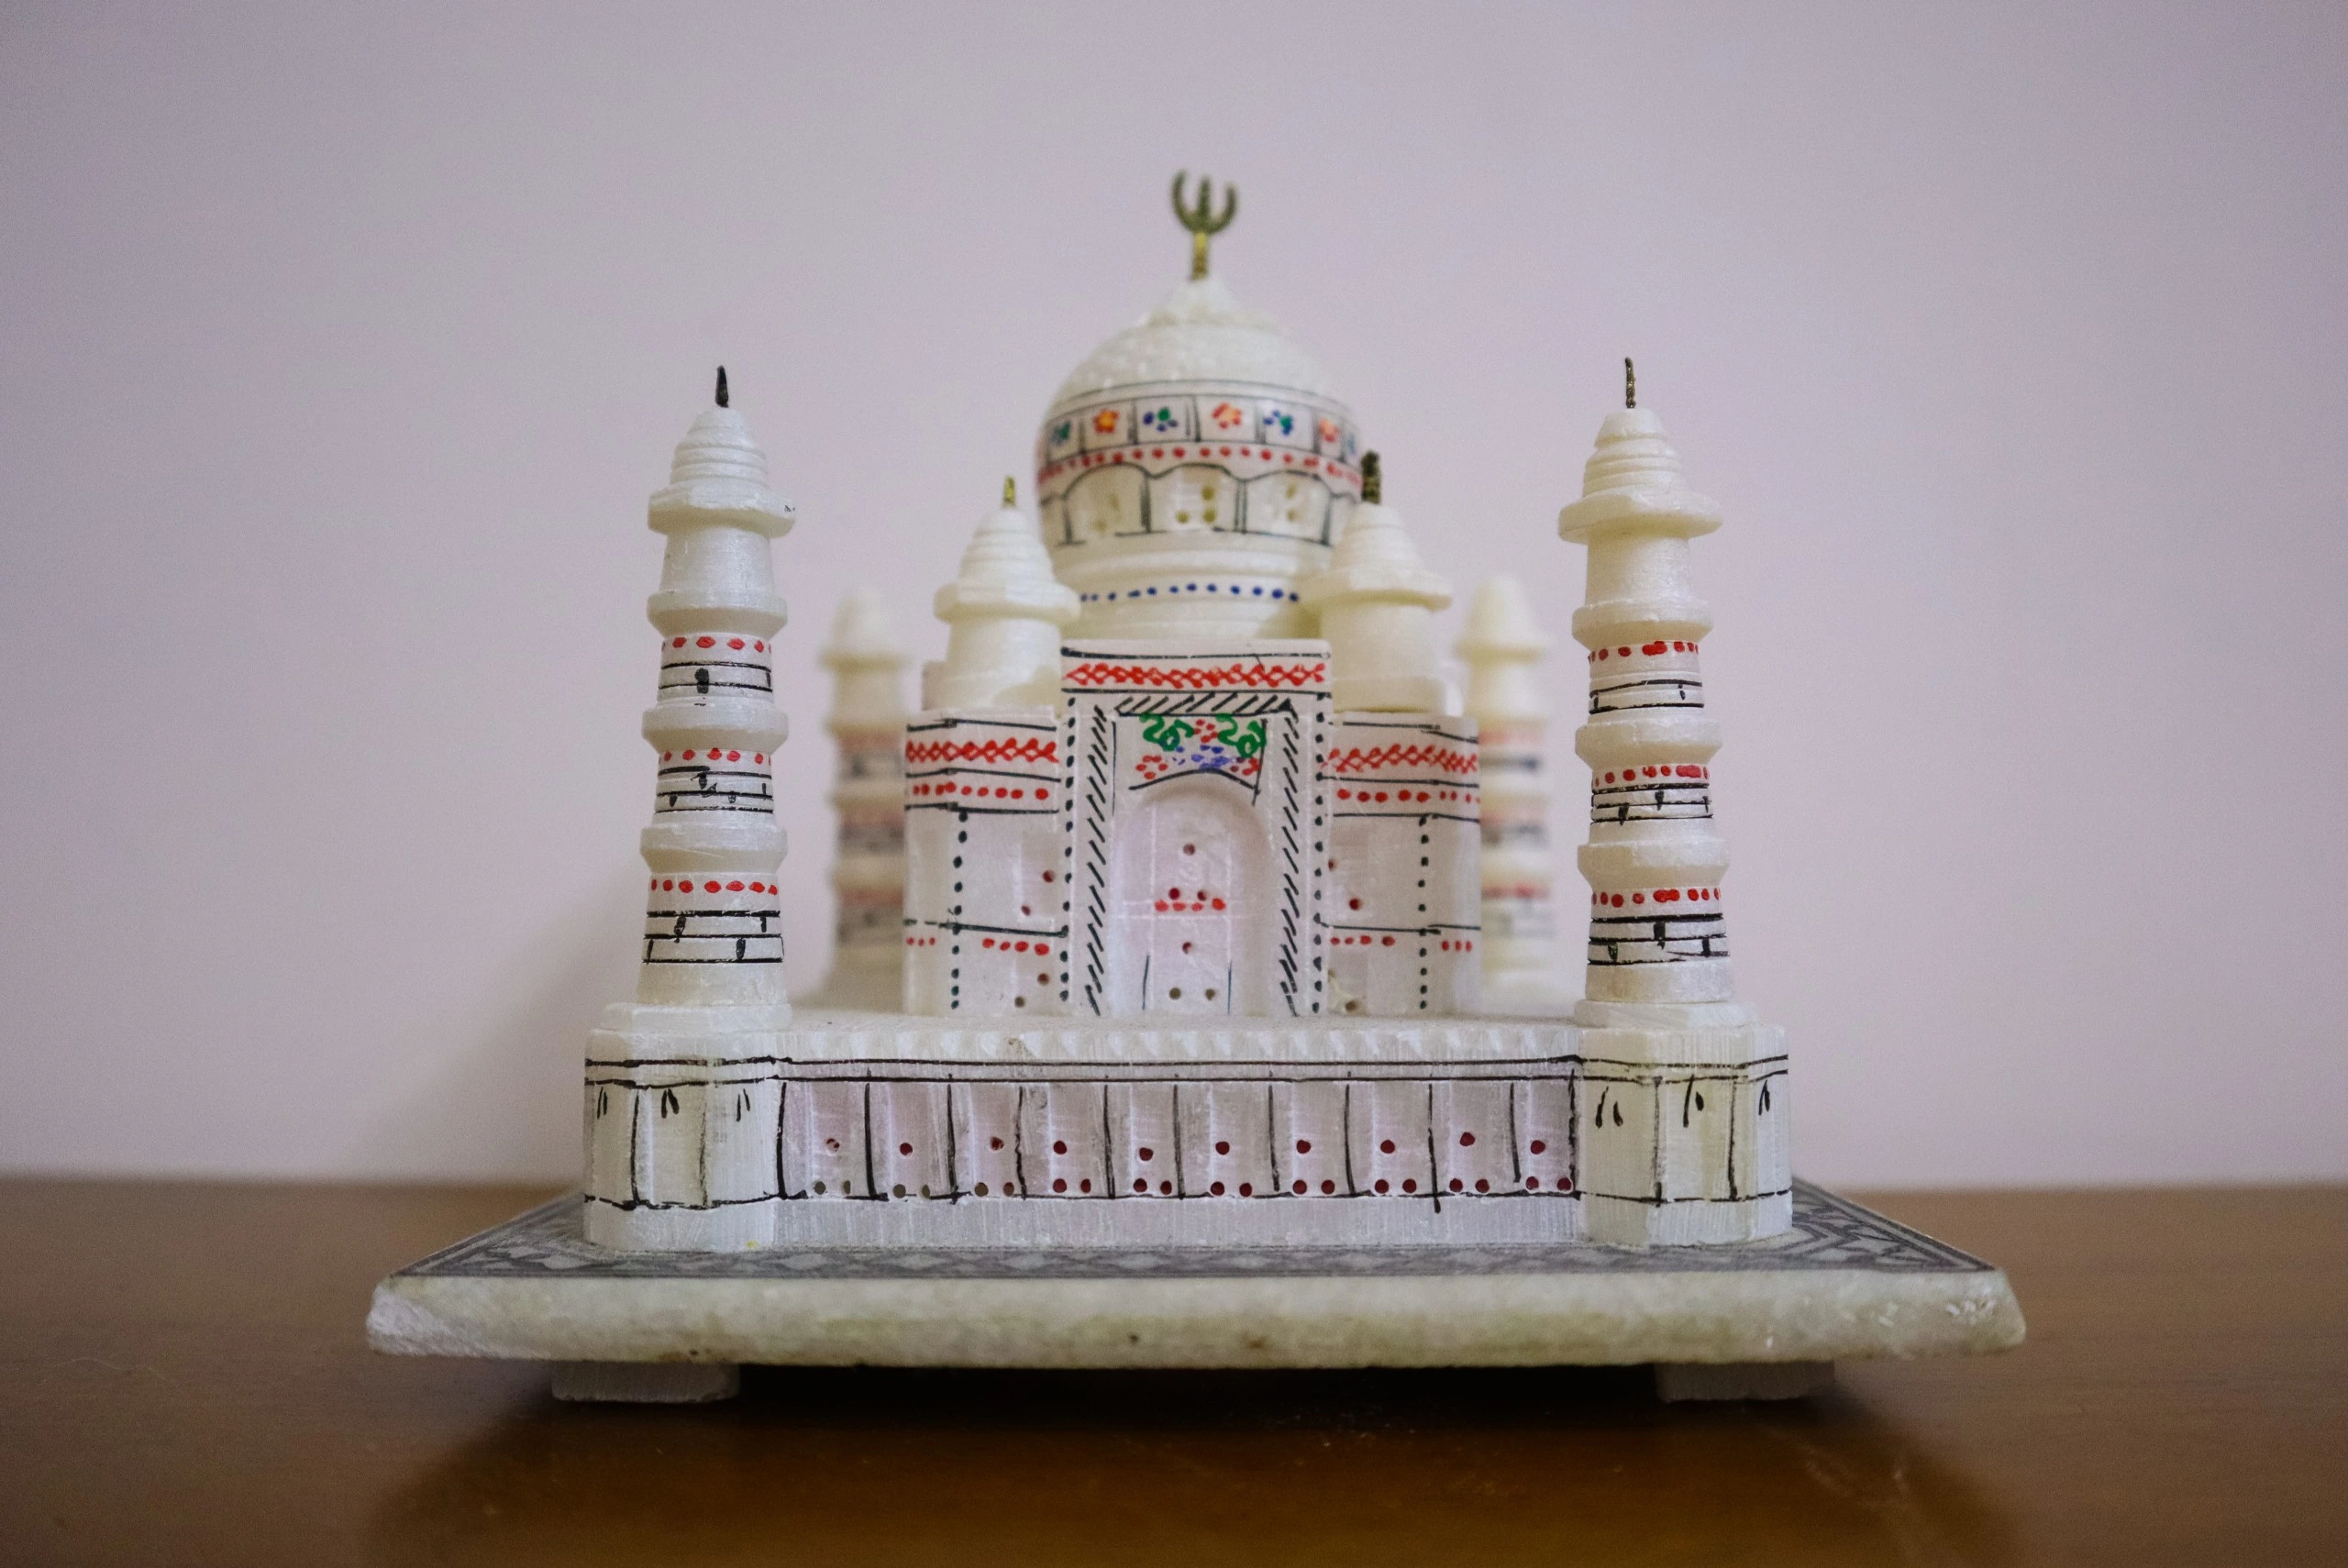 Marble showpiece of Taj Mahal - Agra